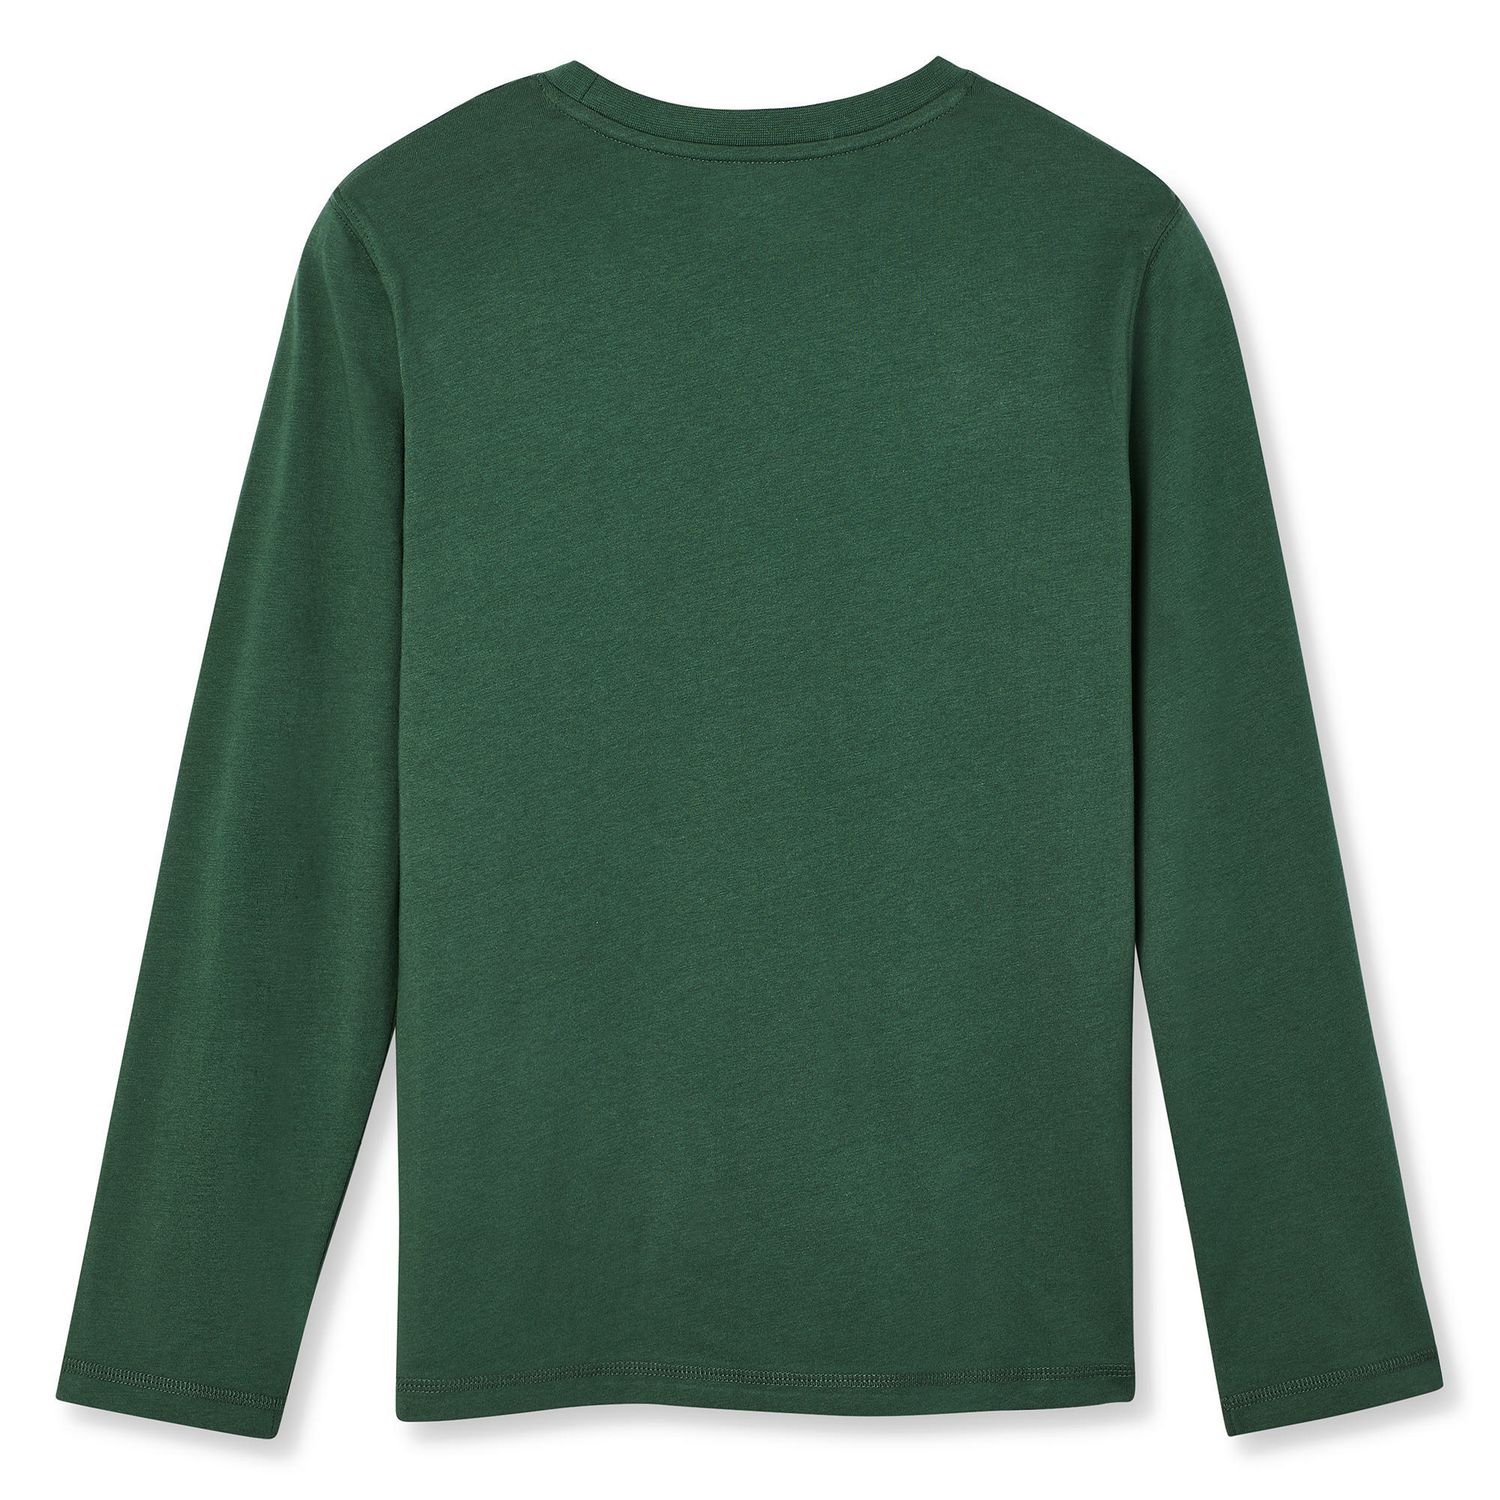 Gymboree 100% Cotton Color Block Marled Green Long Sleeve T-Shirt